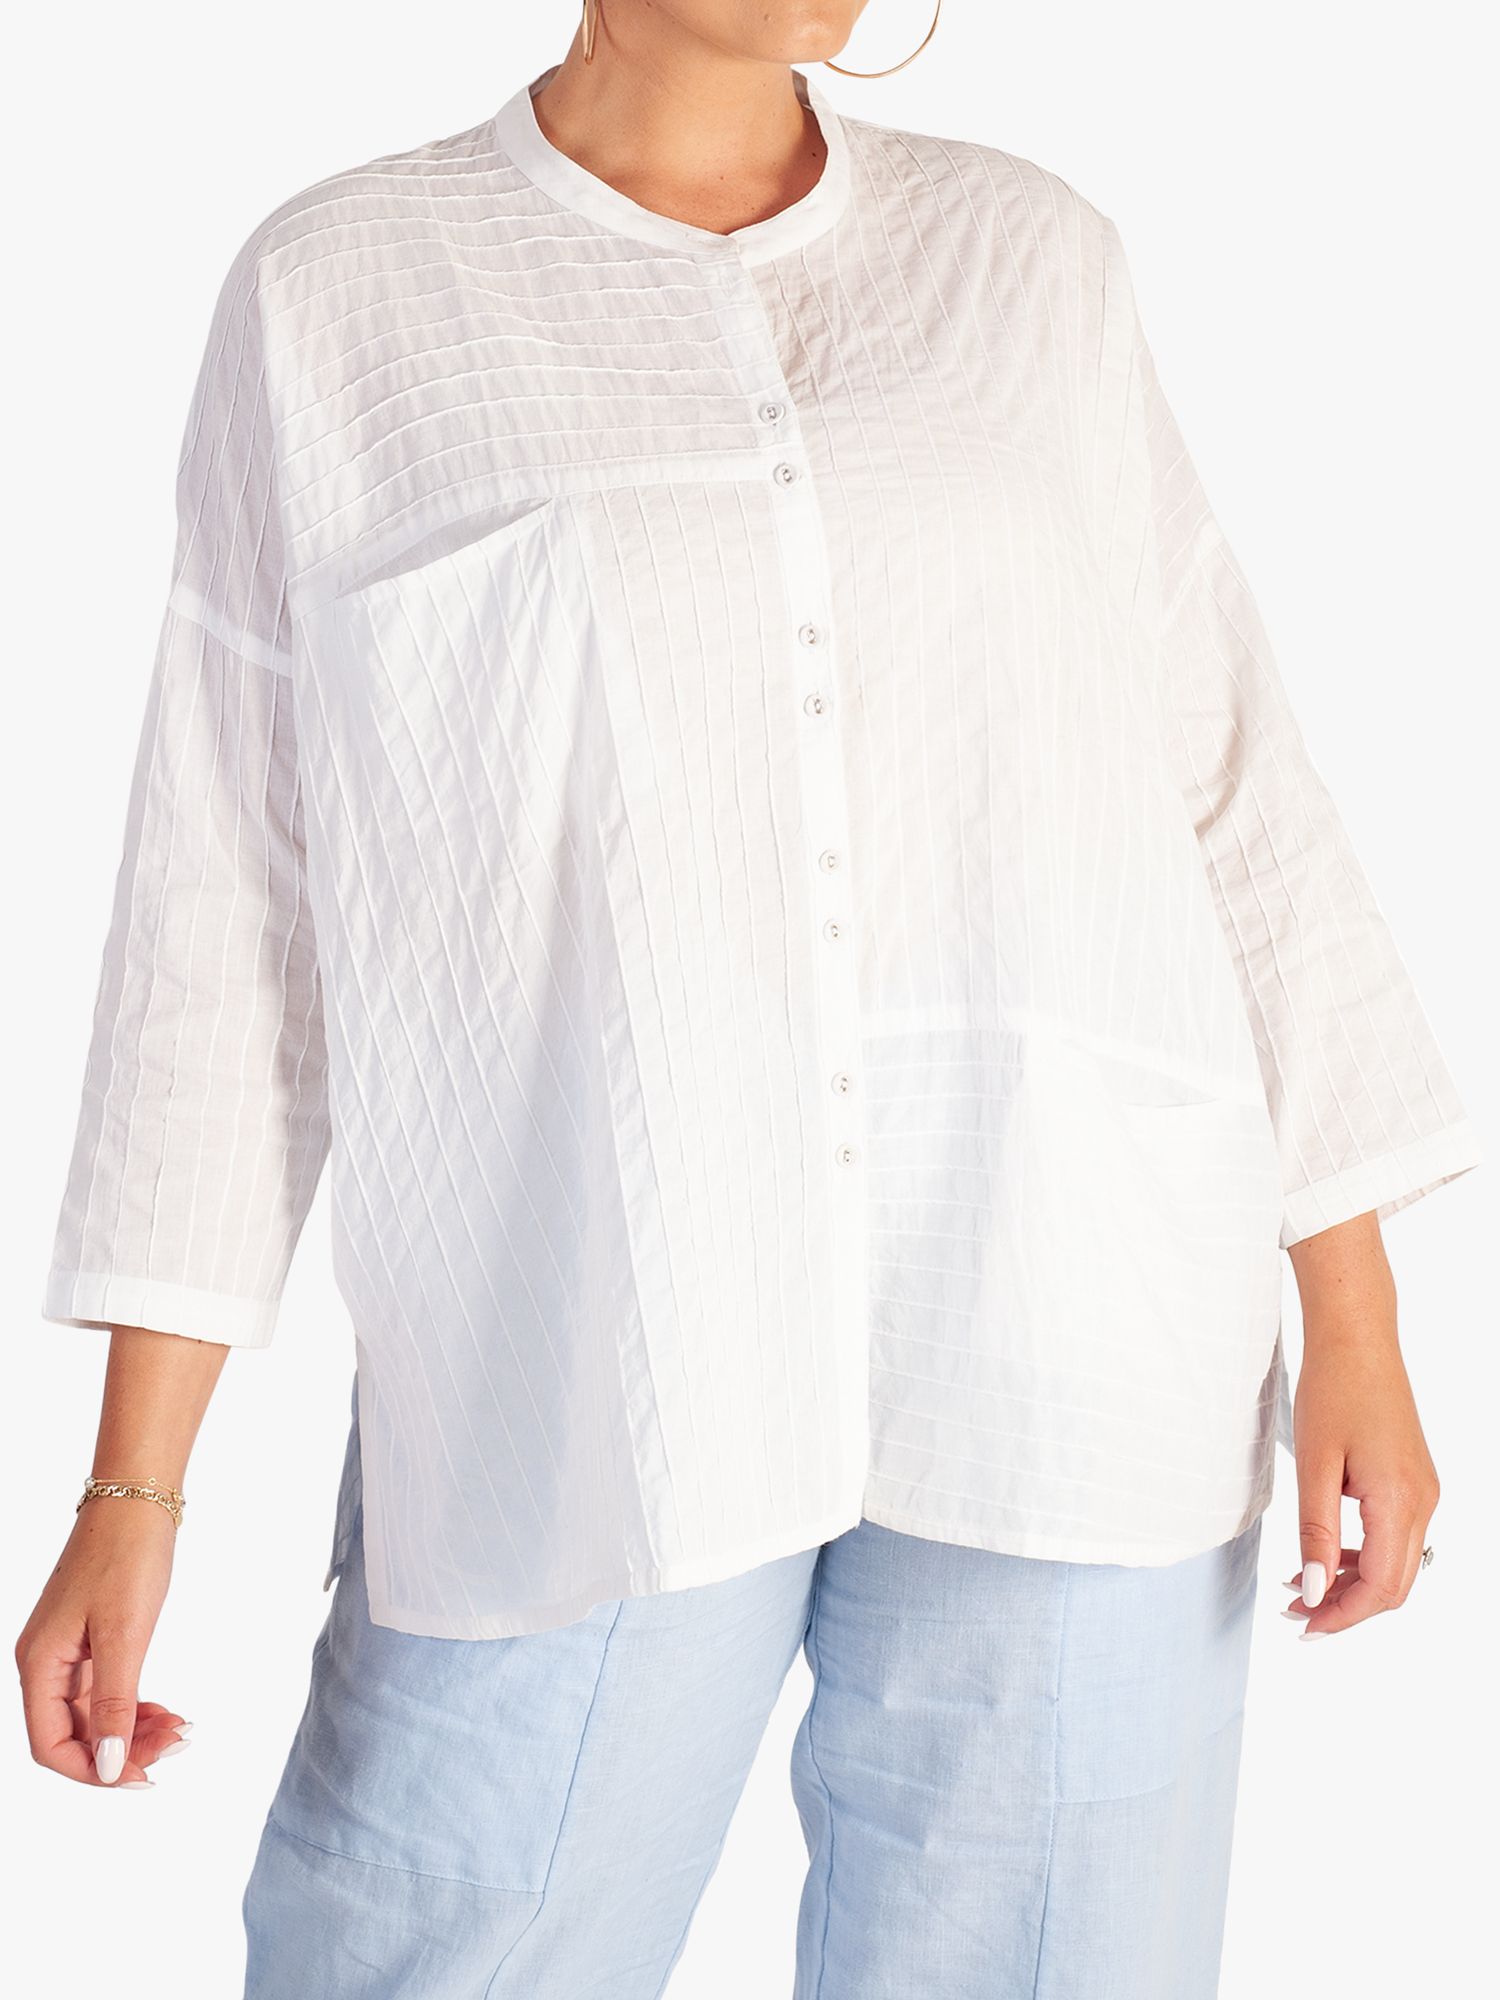 Текстурная рубашка без воротника chesca, белая